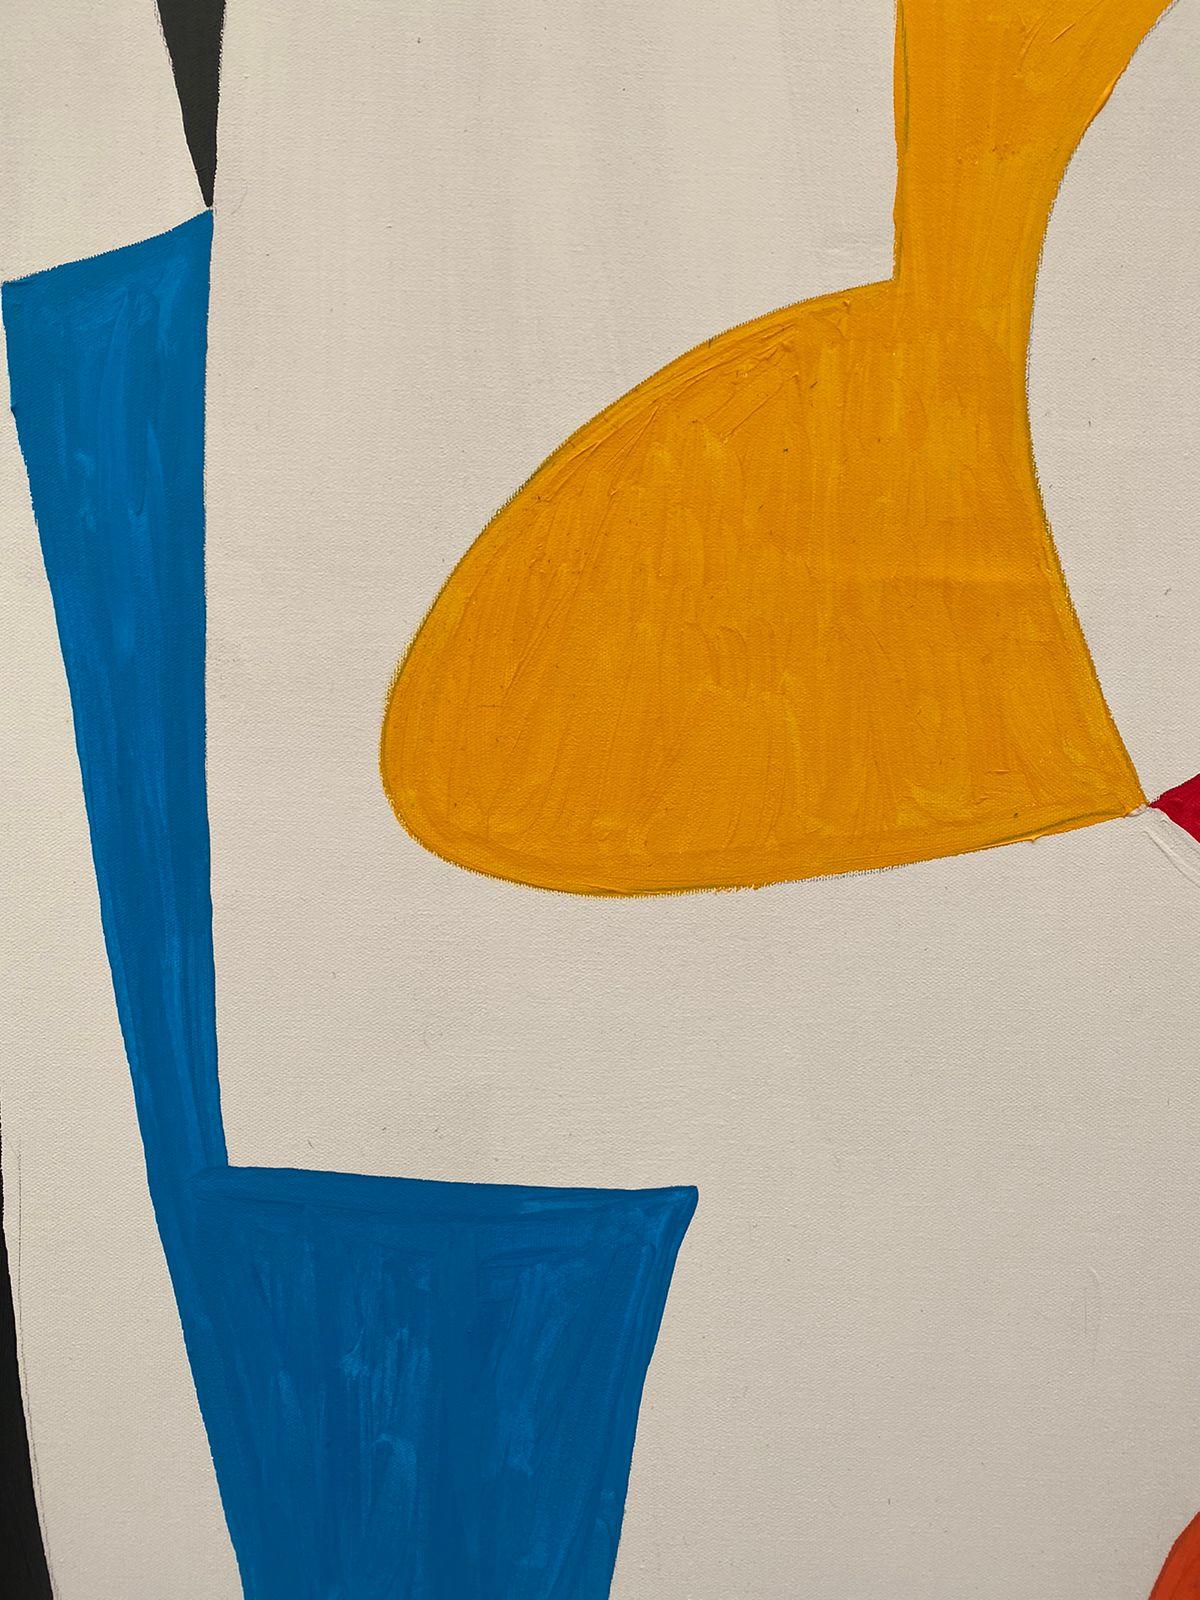 Contemporary Art, Abstract Painting
Acrylic on canvas
150x100cm
Signed 




About the artist
Enrique Pichardo (Mexico City, 1973) graduated from Escuela Nacional de Pintura, Escultura y Grabado (ENPEG) “La Esmeralda”. As a Mexican Contemporary